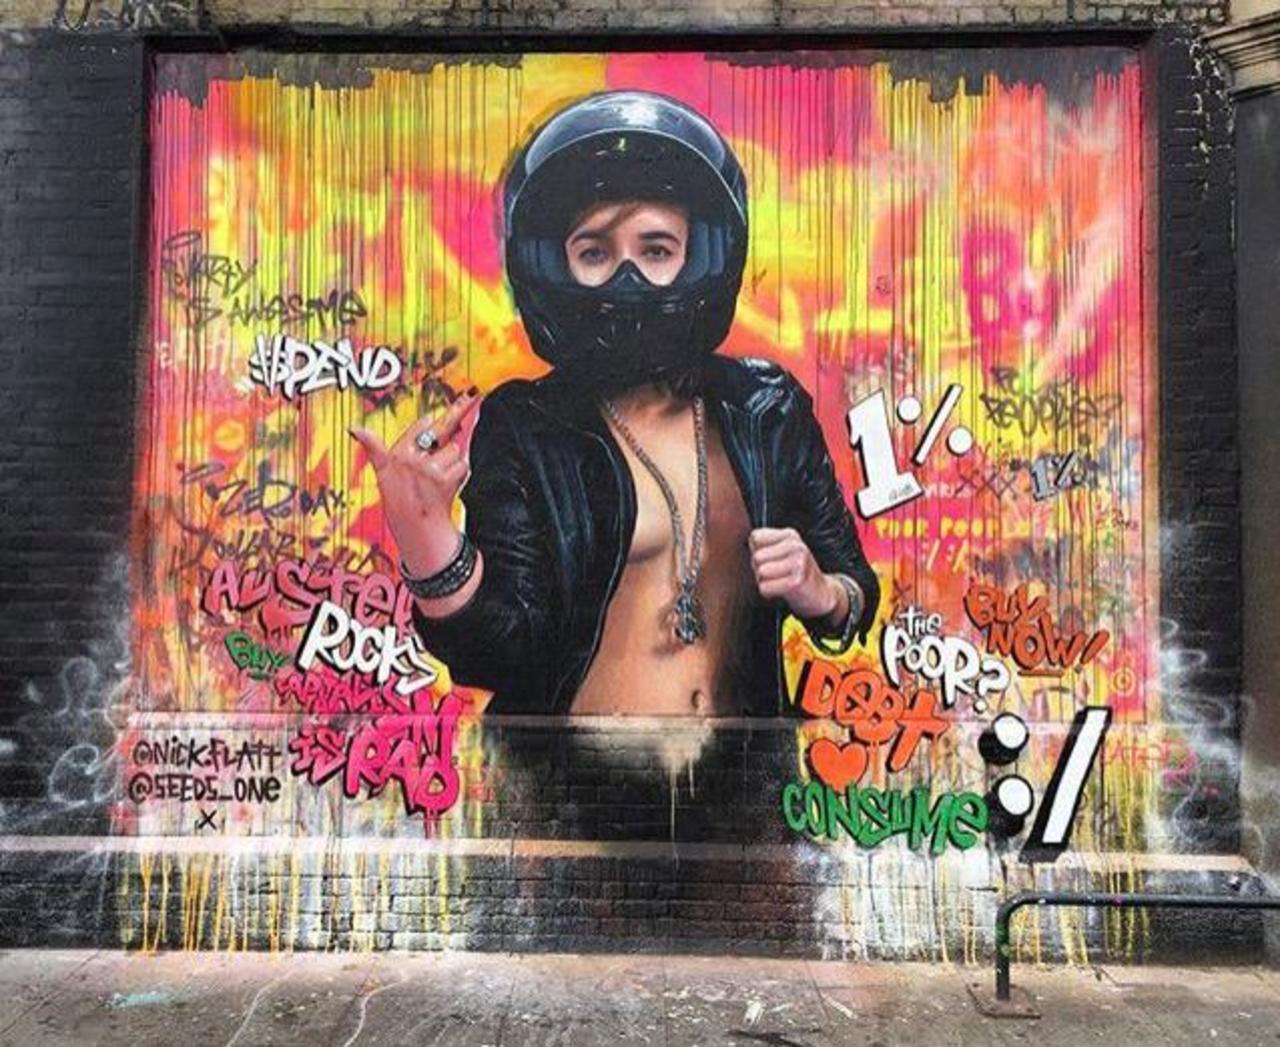 New Street Art collab by Nick Flatt &  Seeds One in London 

#art #graffiti #mural #streetart http://t.co/CRVYhOf93K